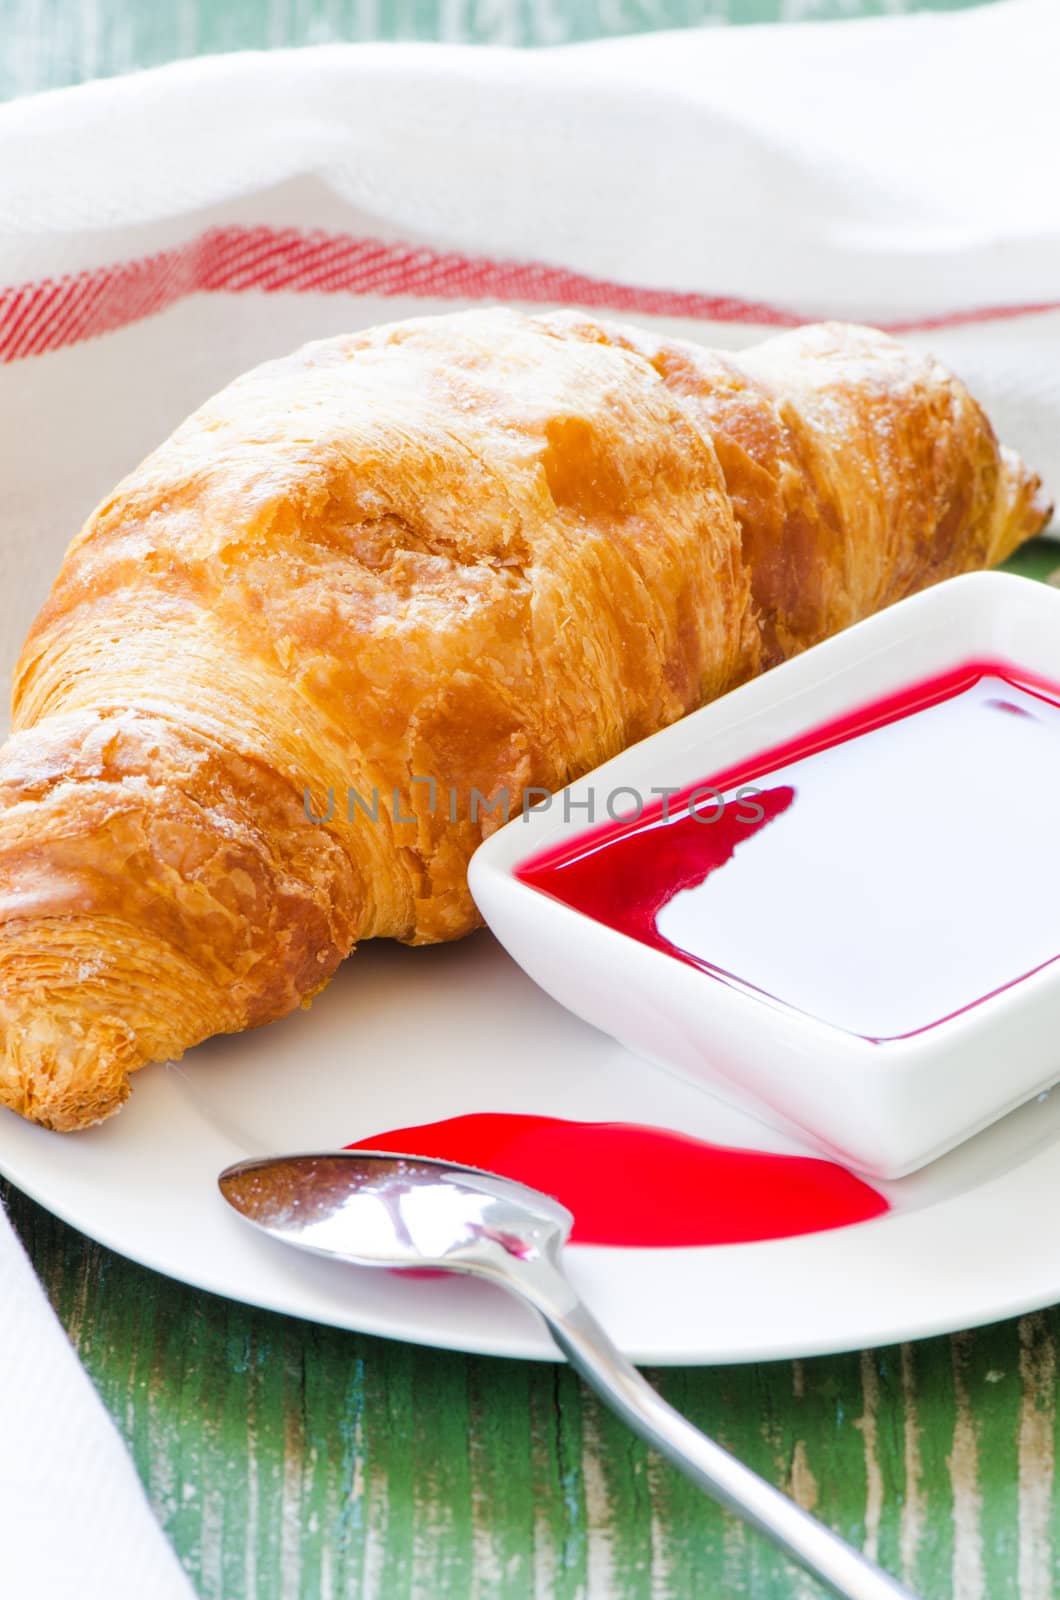 Croissant and jem by Nanisimova